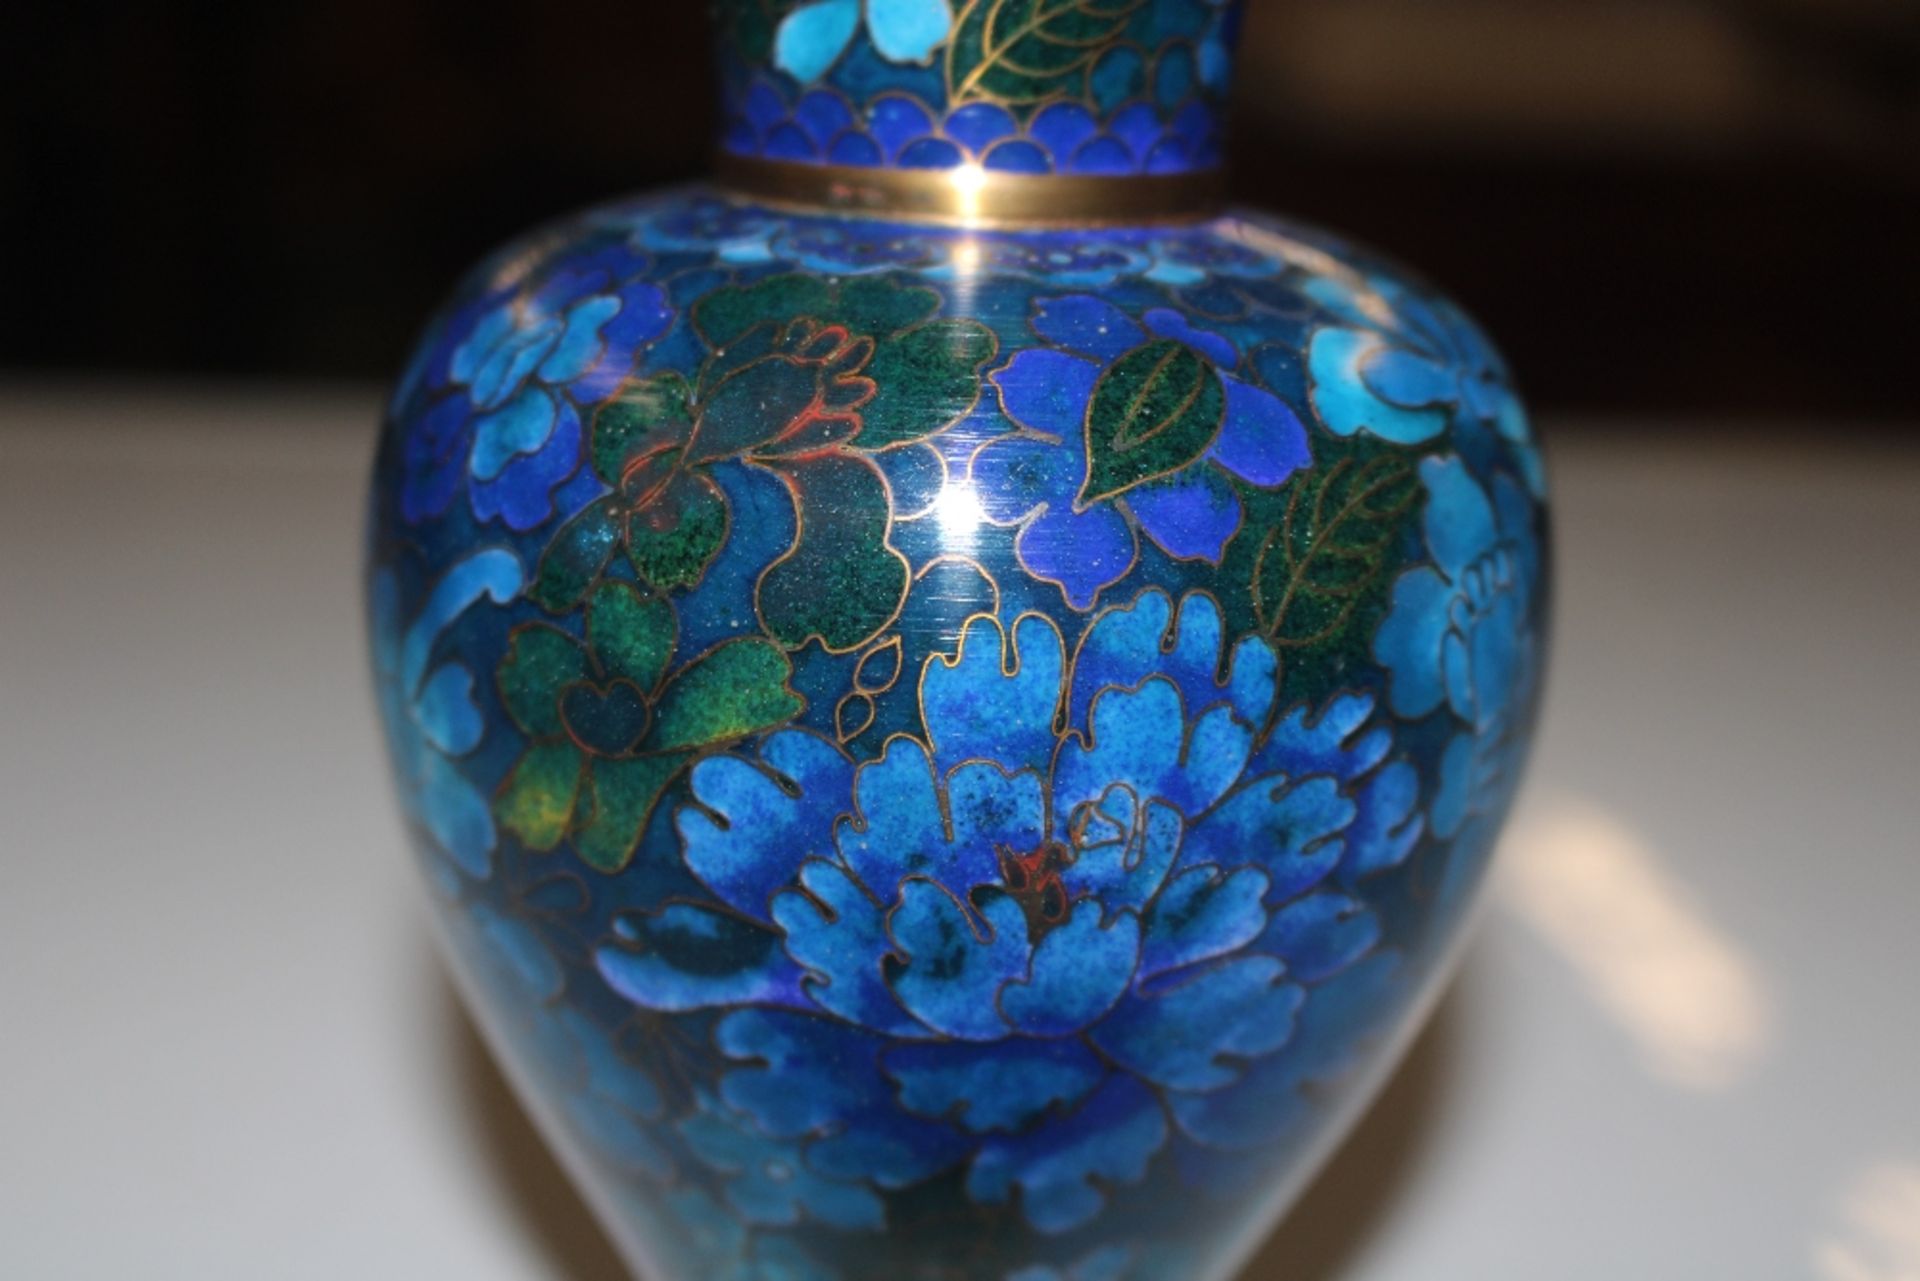 A floral decorated cloisonné vase - Image 2 of 3